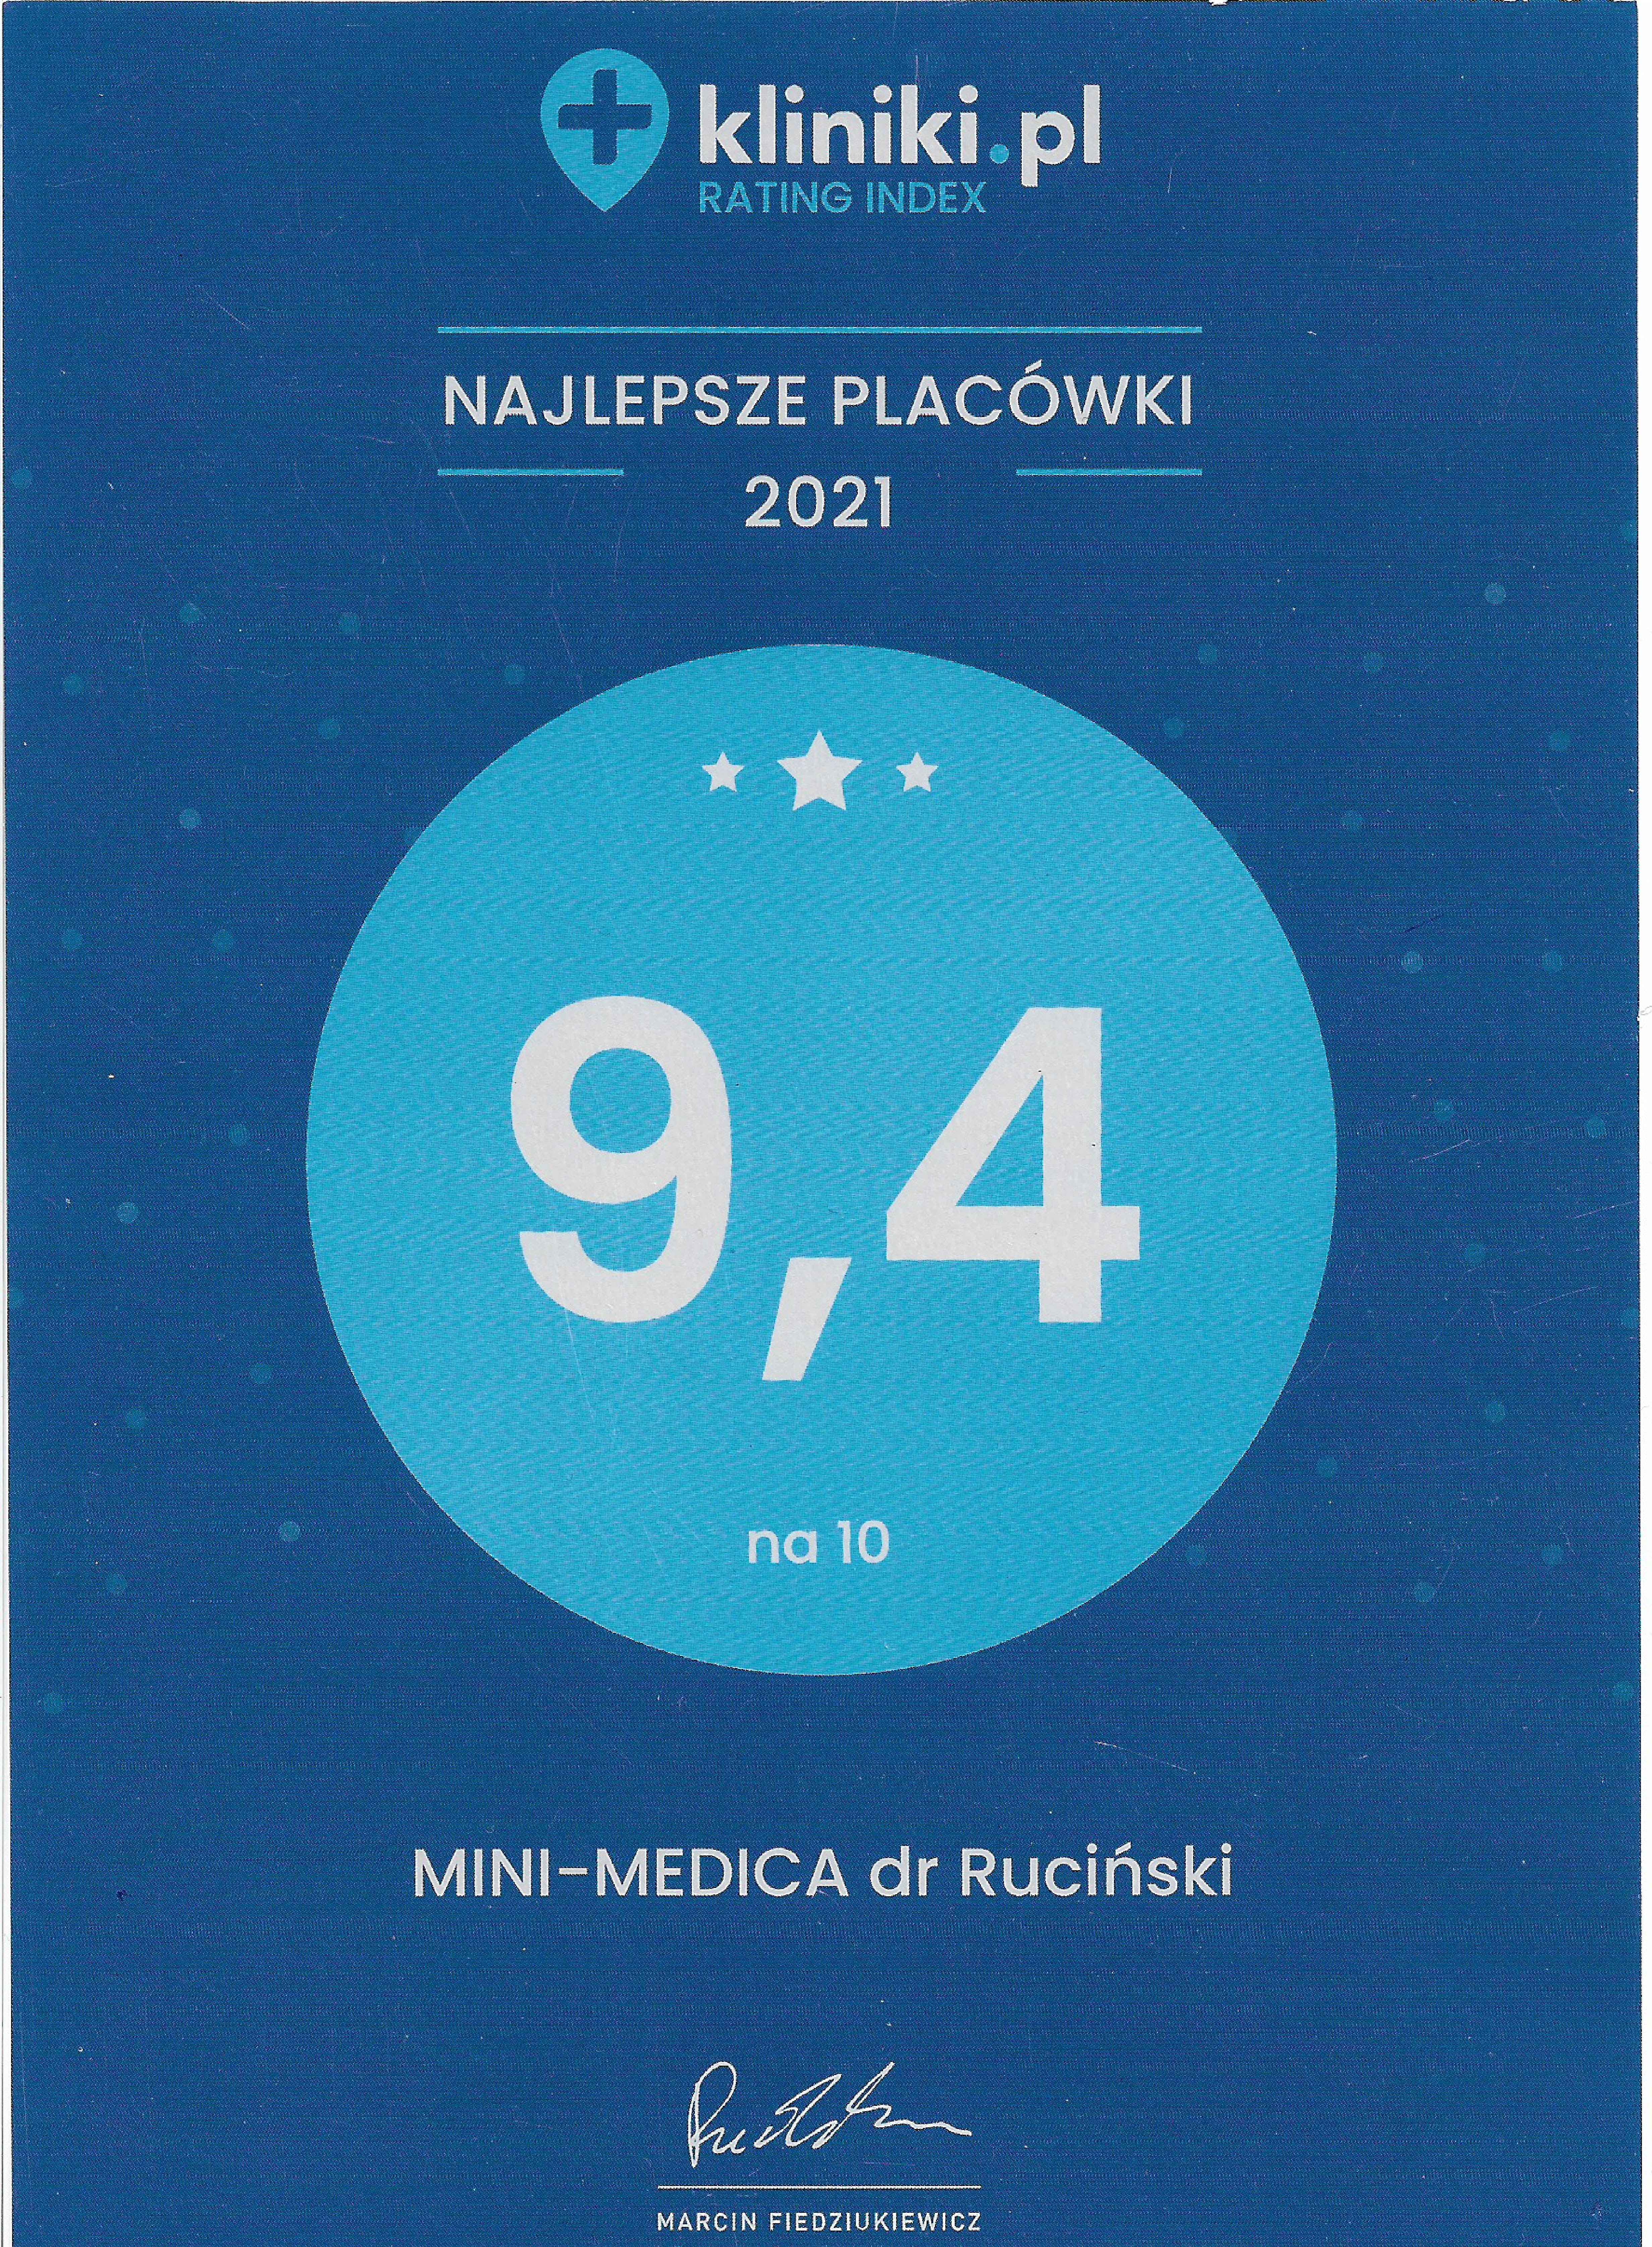 Kliniki.pl